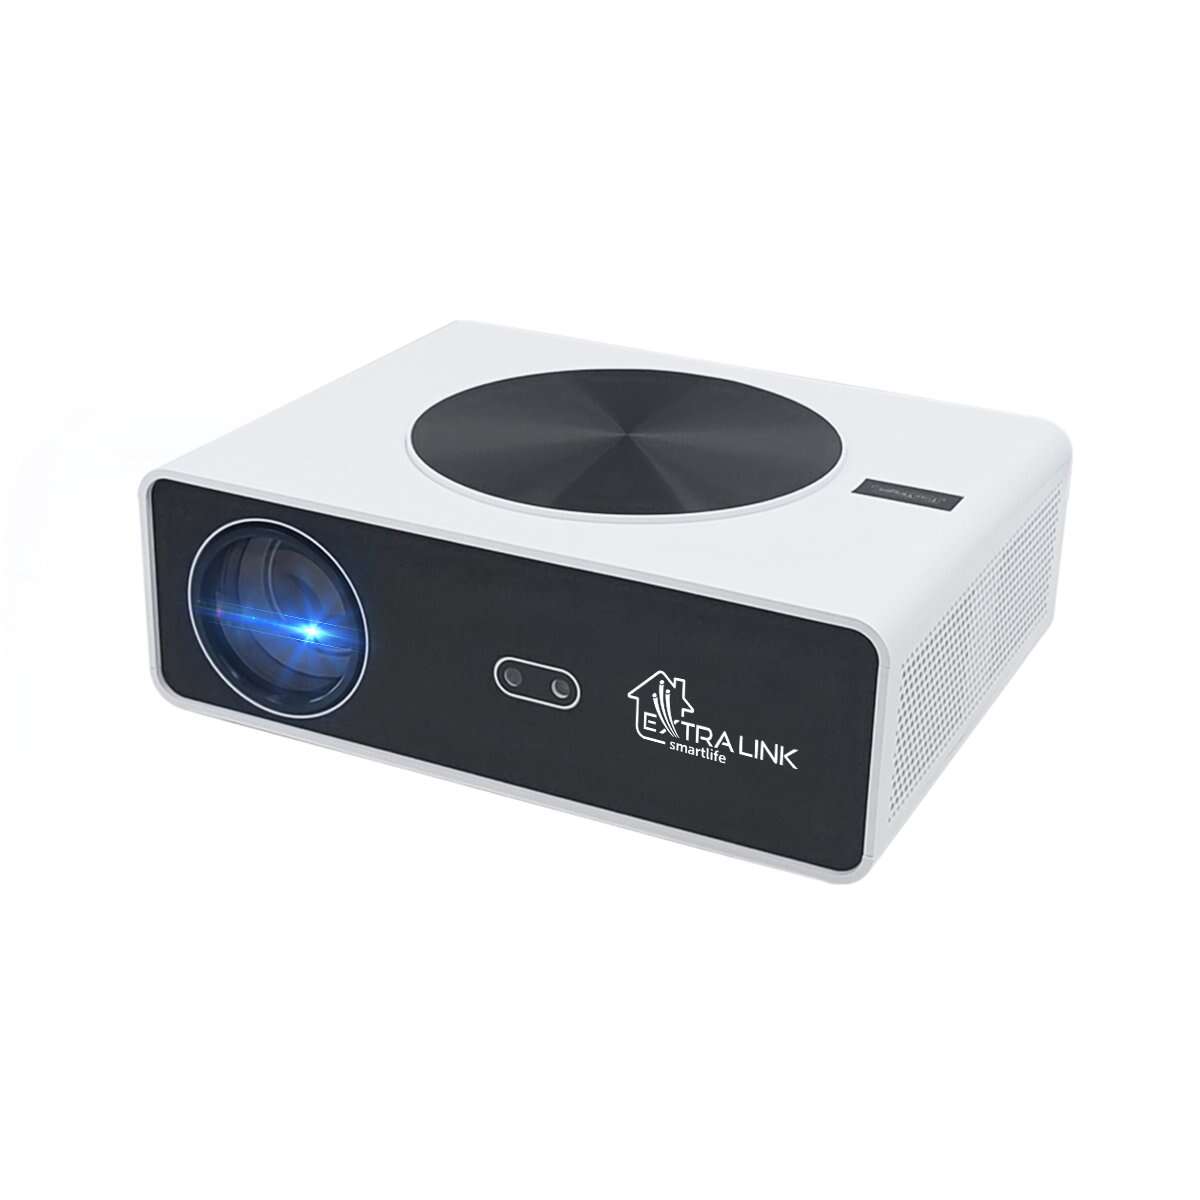 Extralink smart life vision max projektor - fehér/fekete